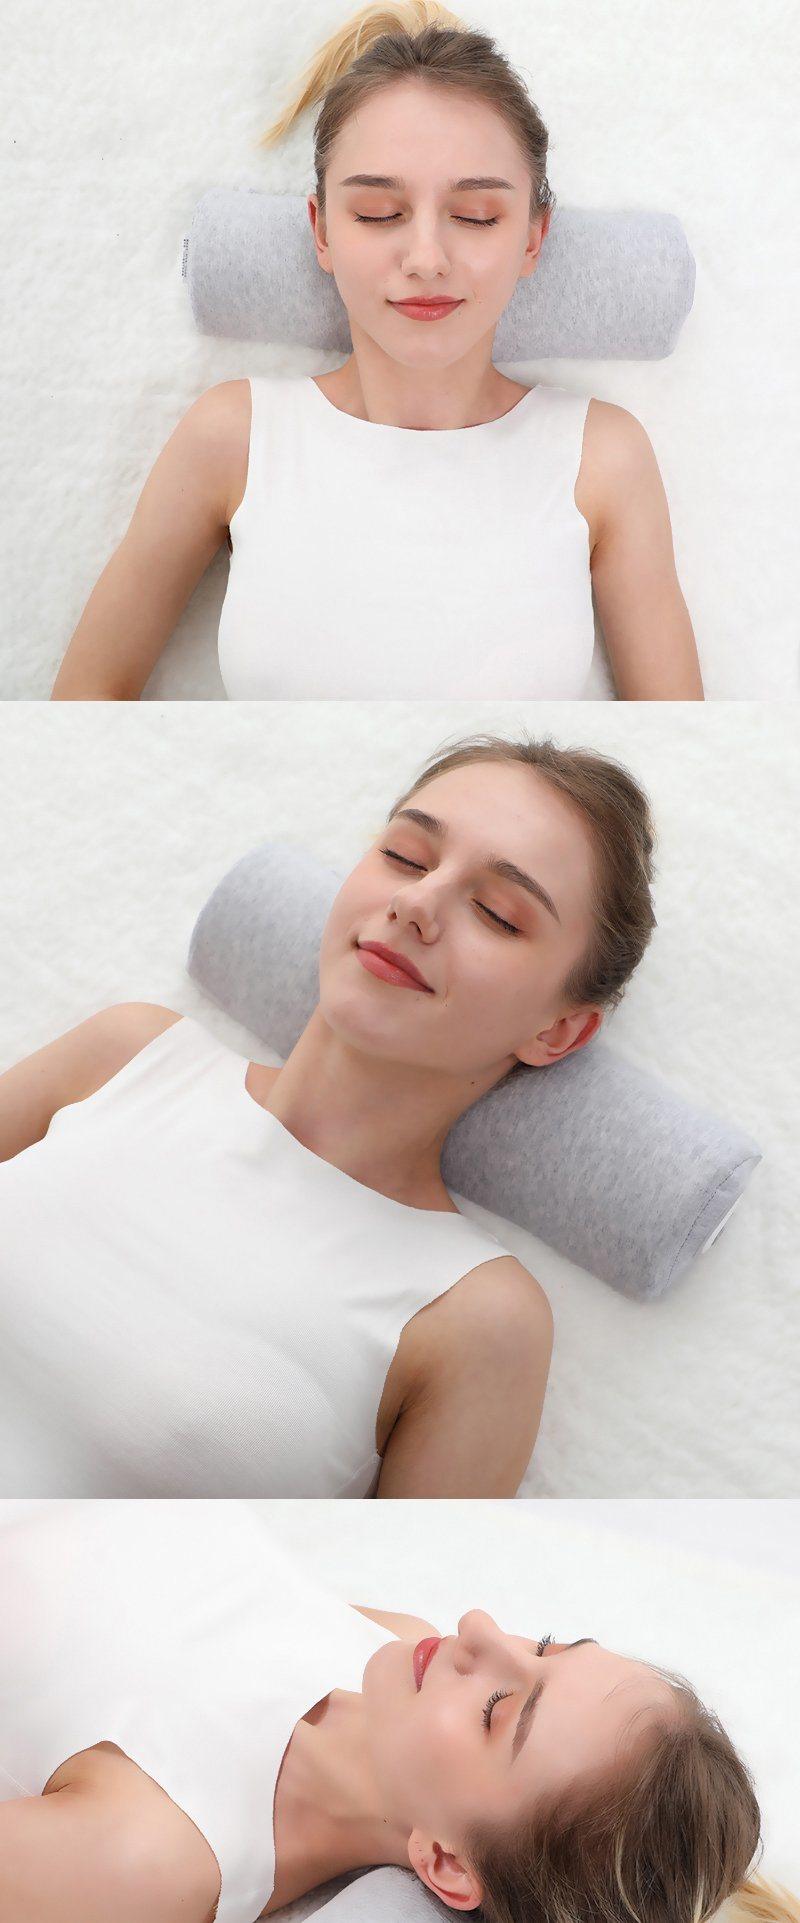 Pop Relax Relief Pain Massage Neck Pillow for Neck Relax Latest Memory Foam Vibration Massage